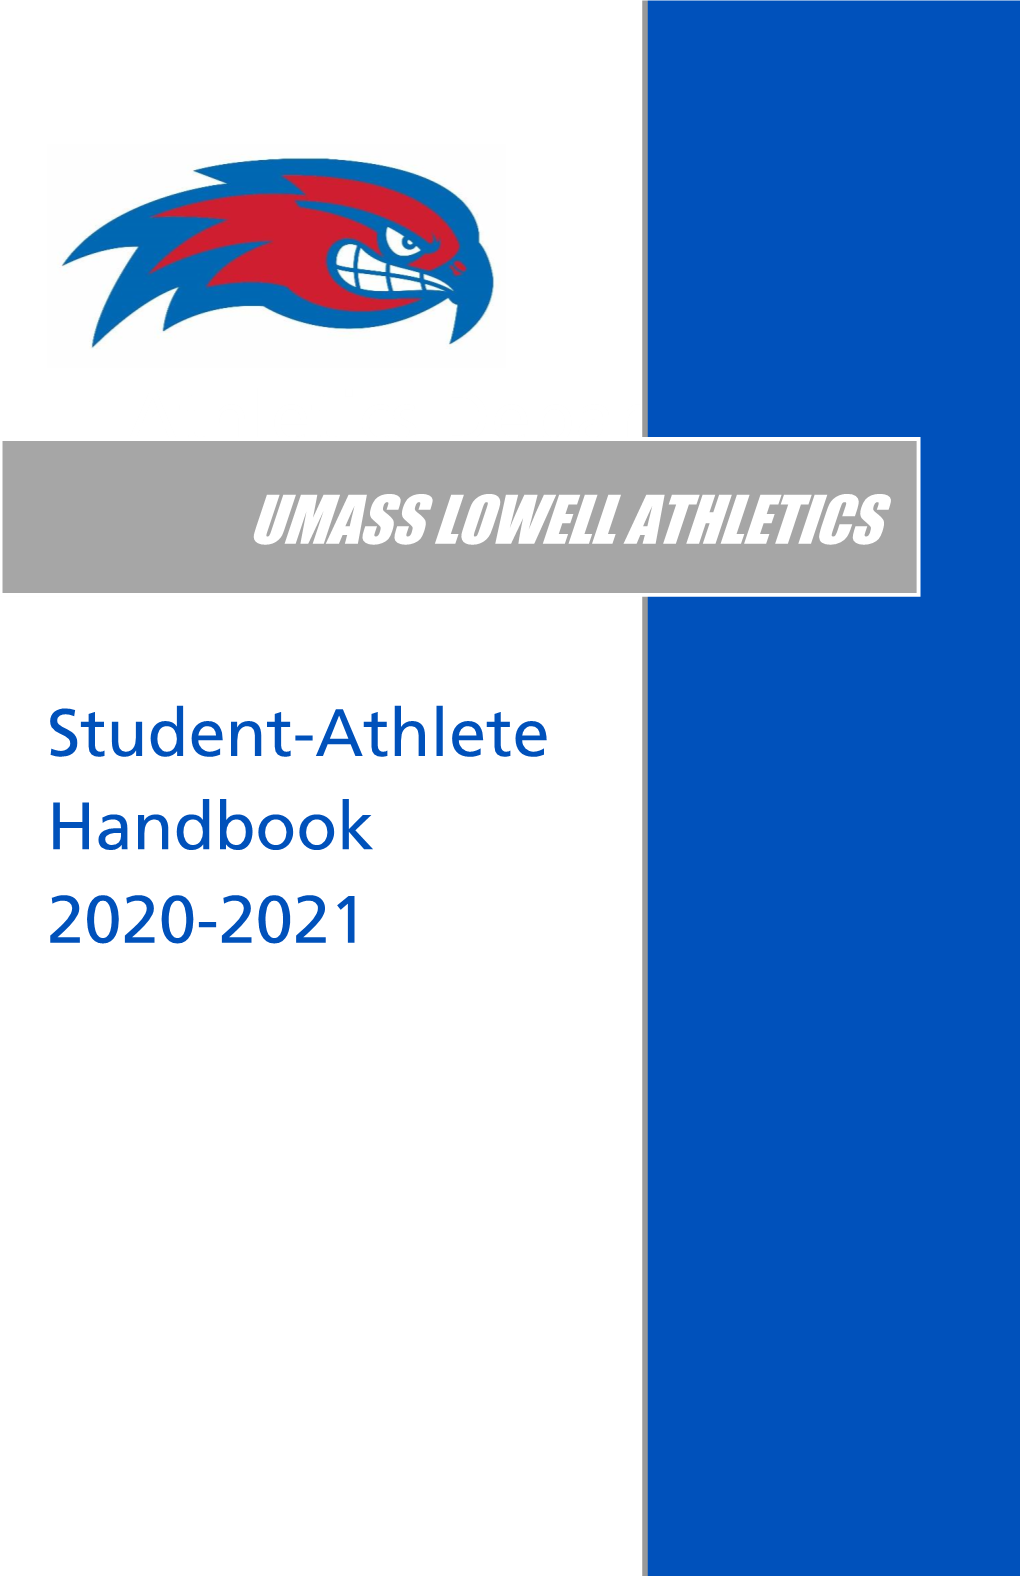 Athletics Department UMASS LOWELL ATHLETICS